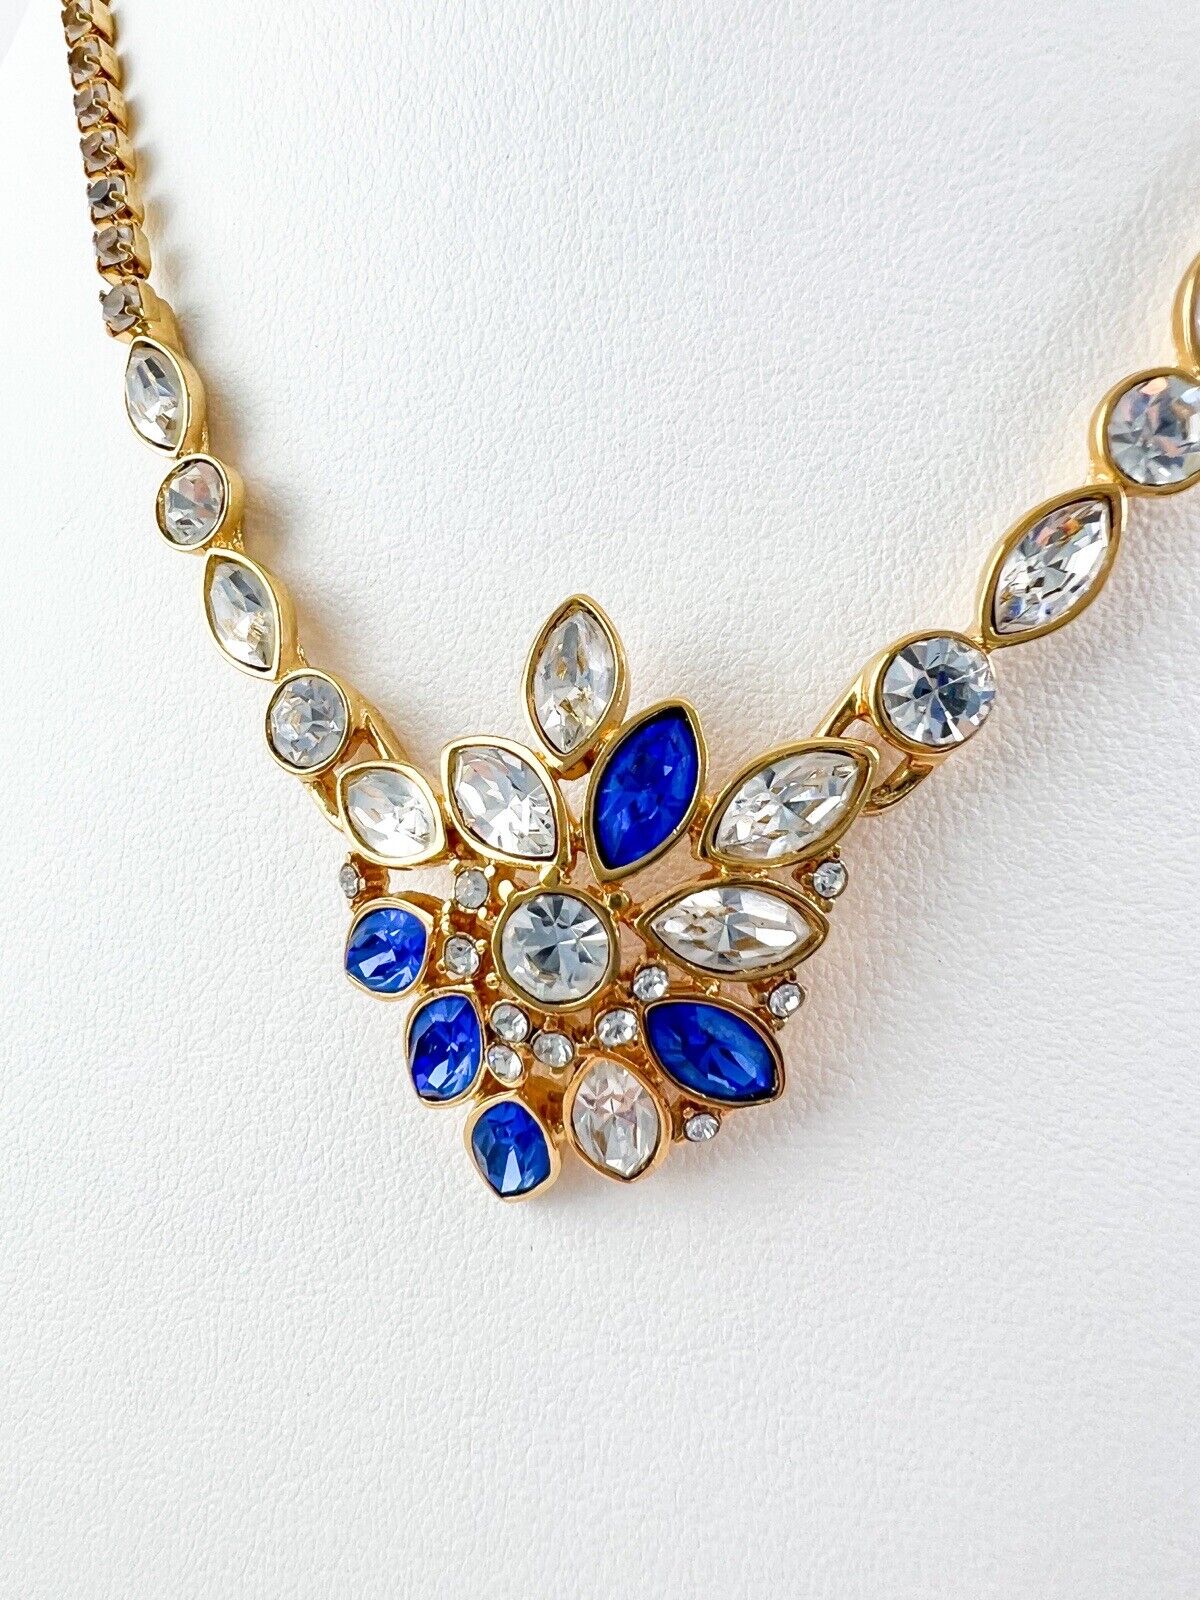 Monet Vintage Choker Necklace Rhinestones Blue